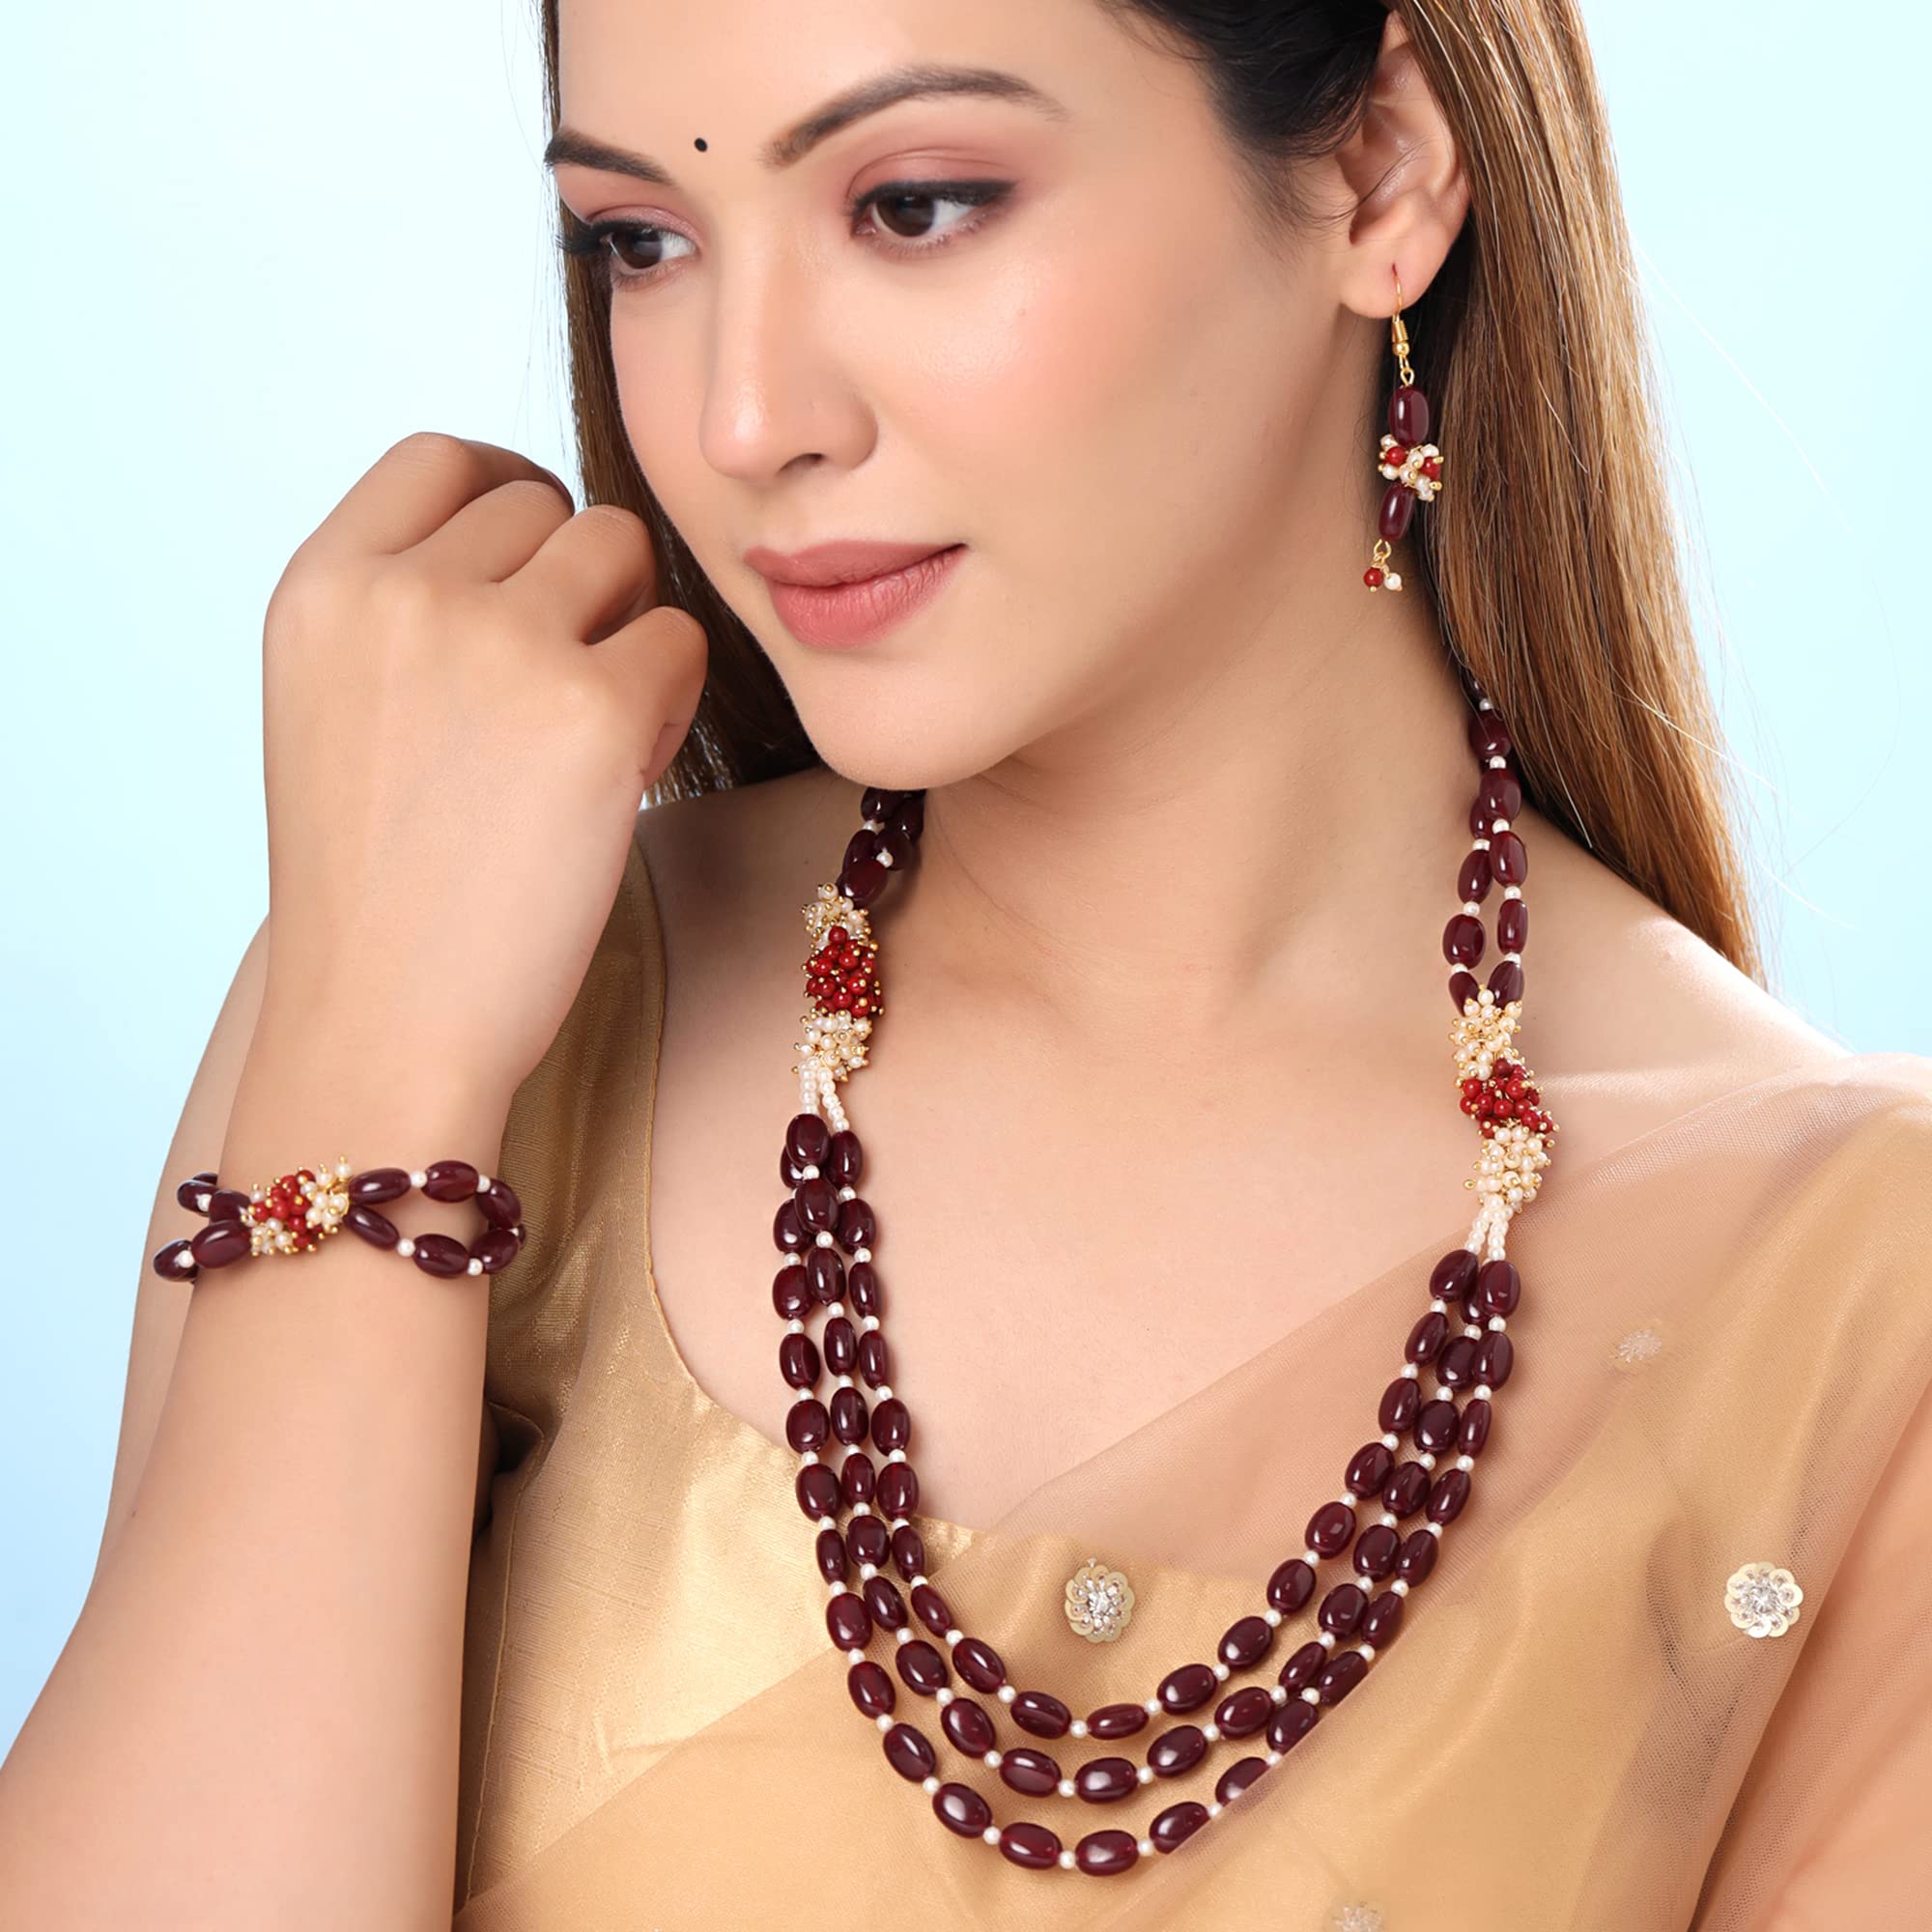 Shree Jai Sai Art Pearls and Beads Necklace Set